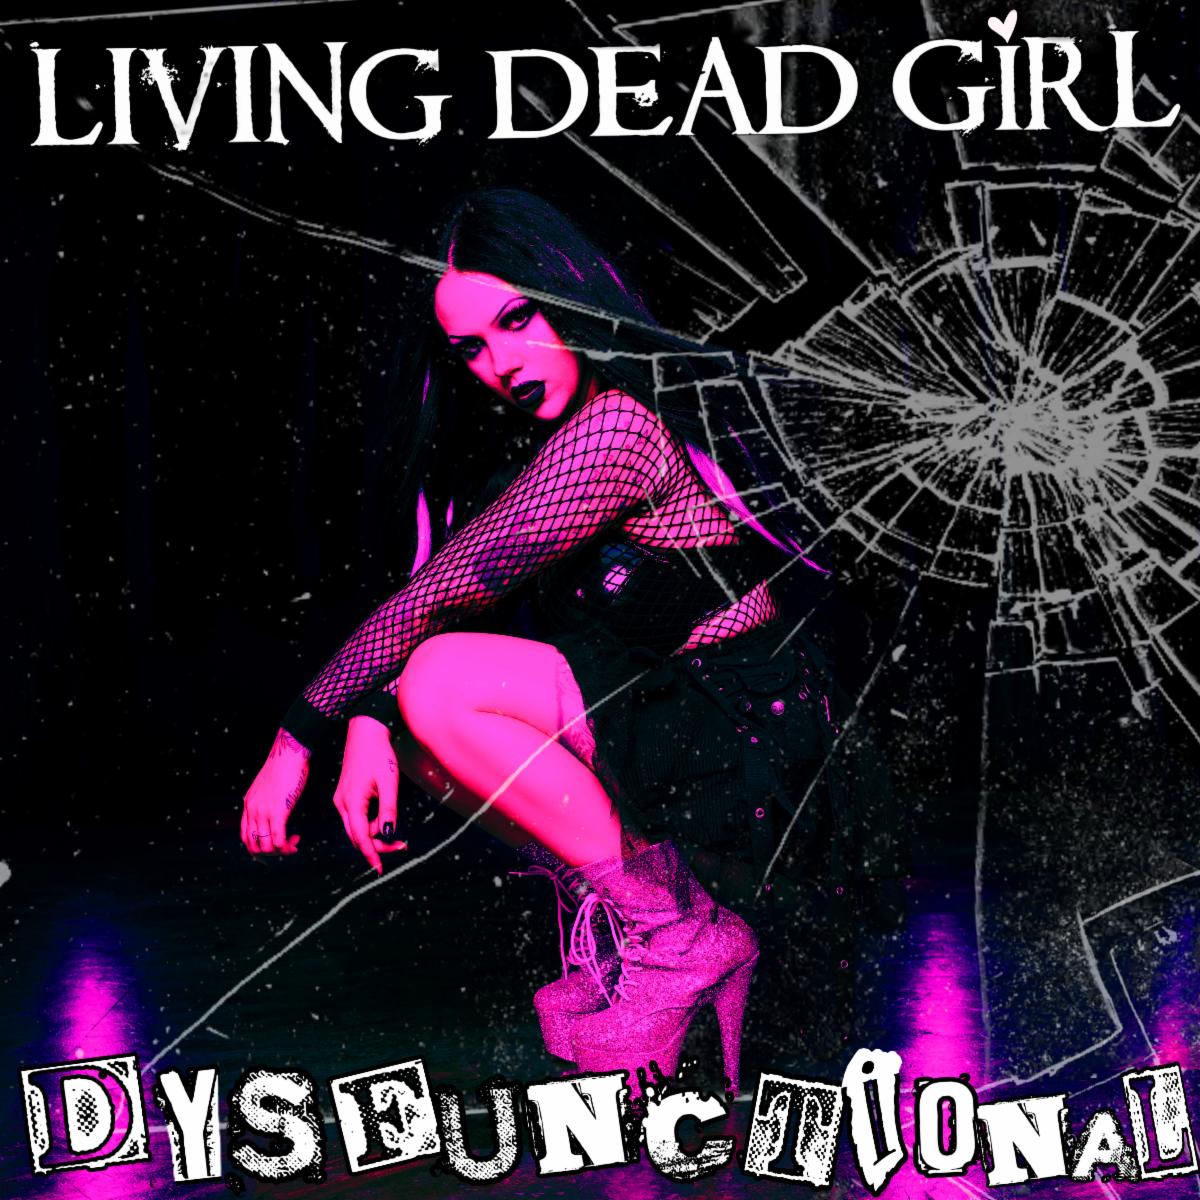 LIVING DEAD GIRL Premieres "Dysfunctional" at Metal Sucks